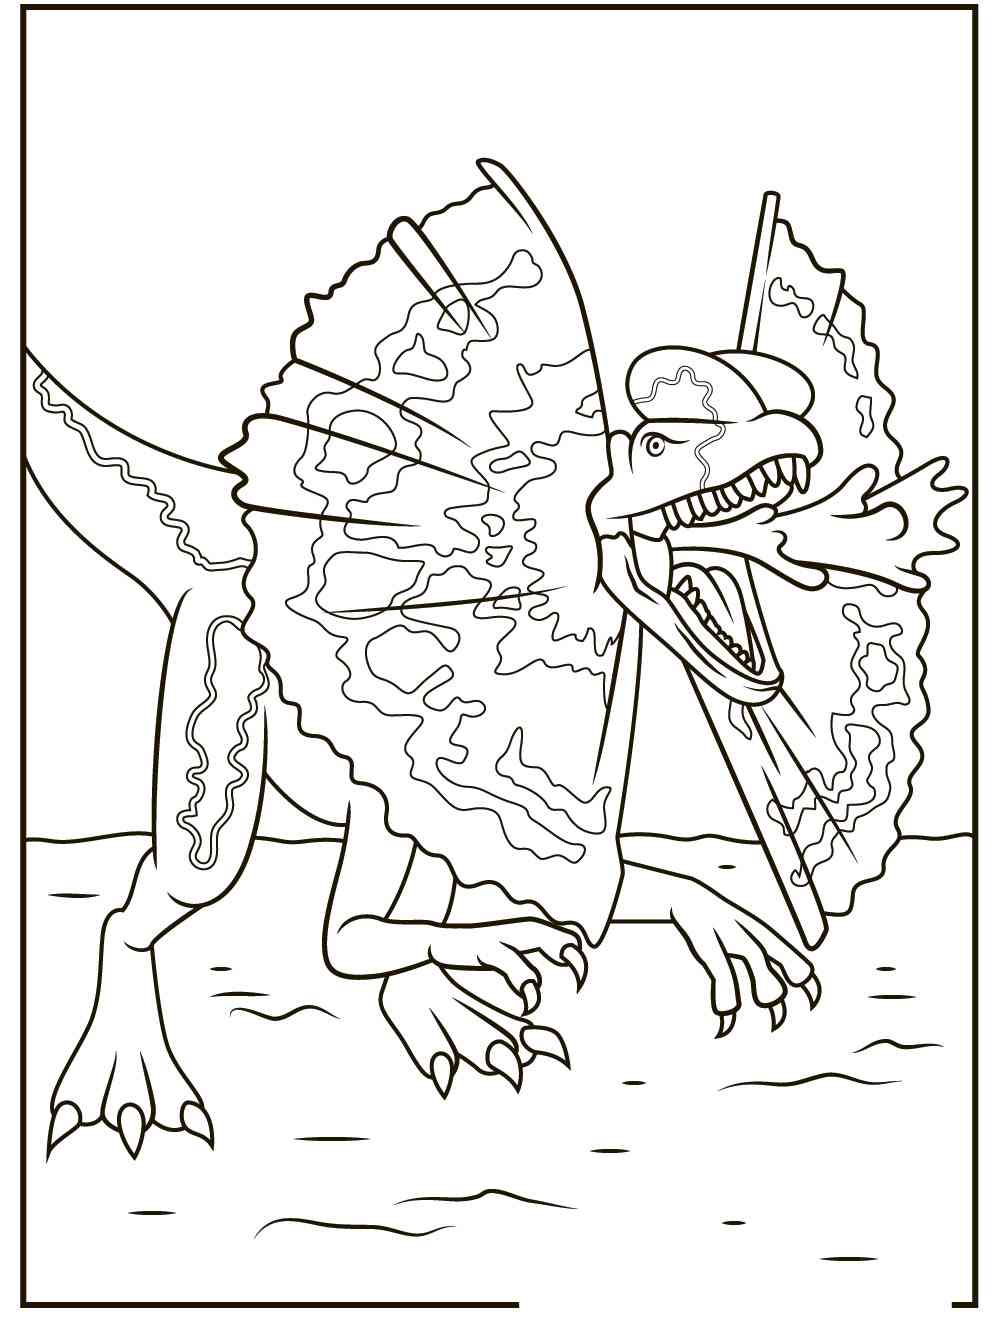 Dilophosaurus coloring pages